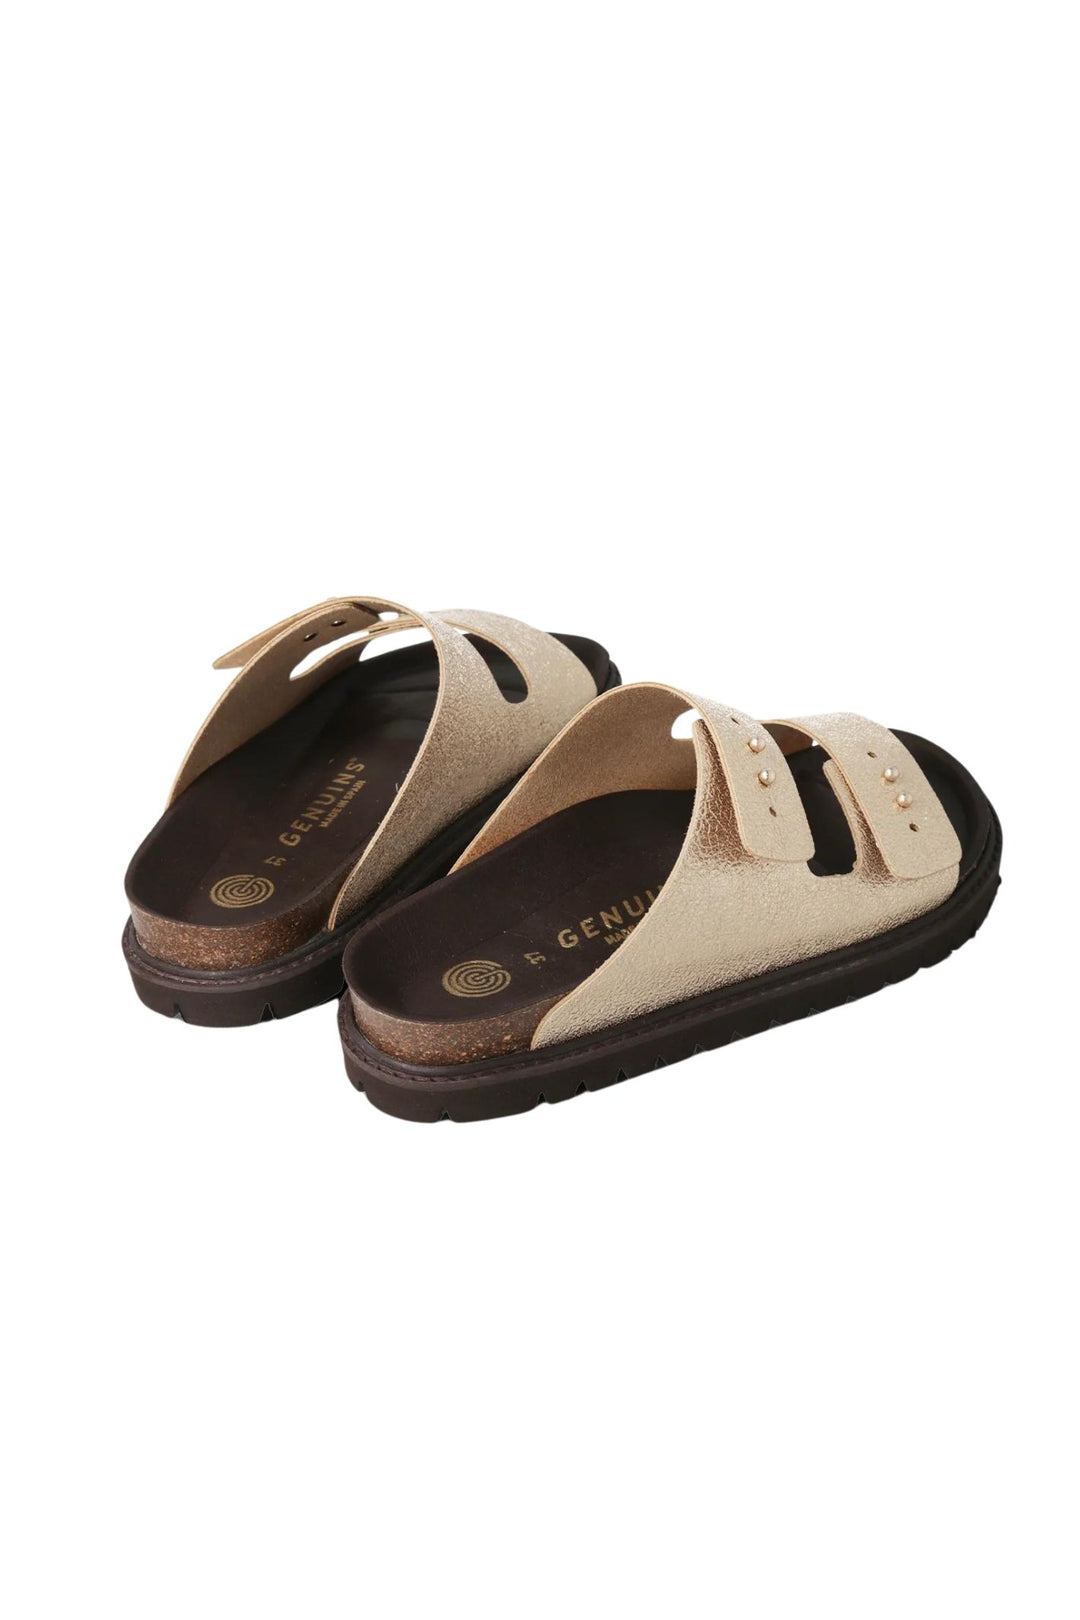 Genuins G105606 Metallic Gold Vegan Sandals